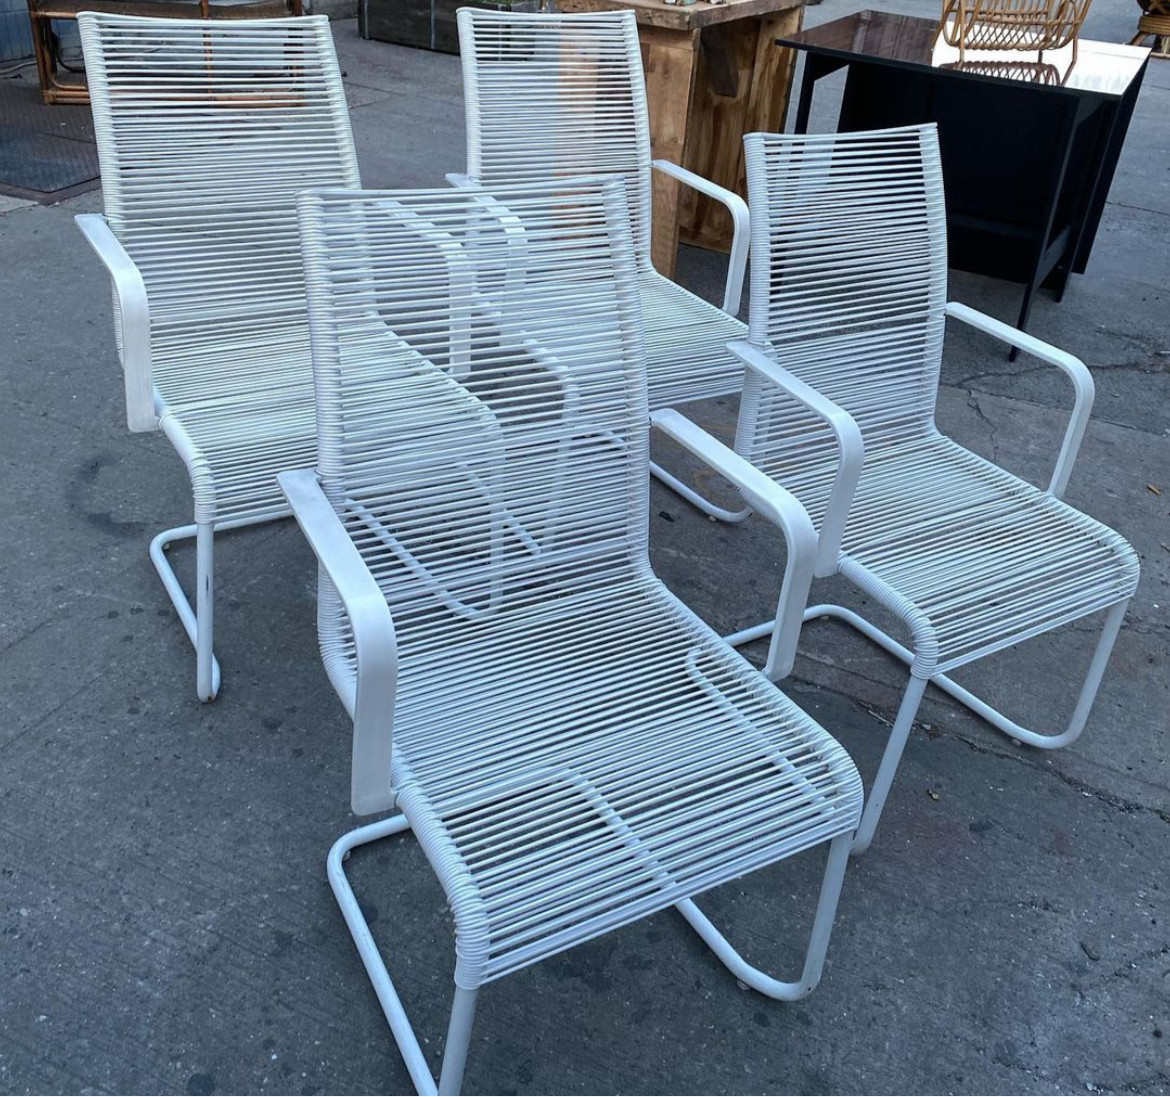 Outdoor Spaghetti Chairs - White